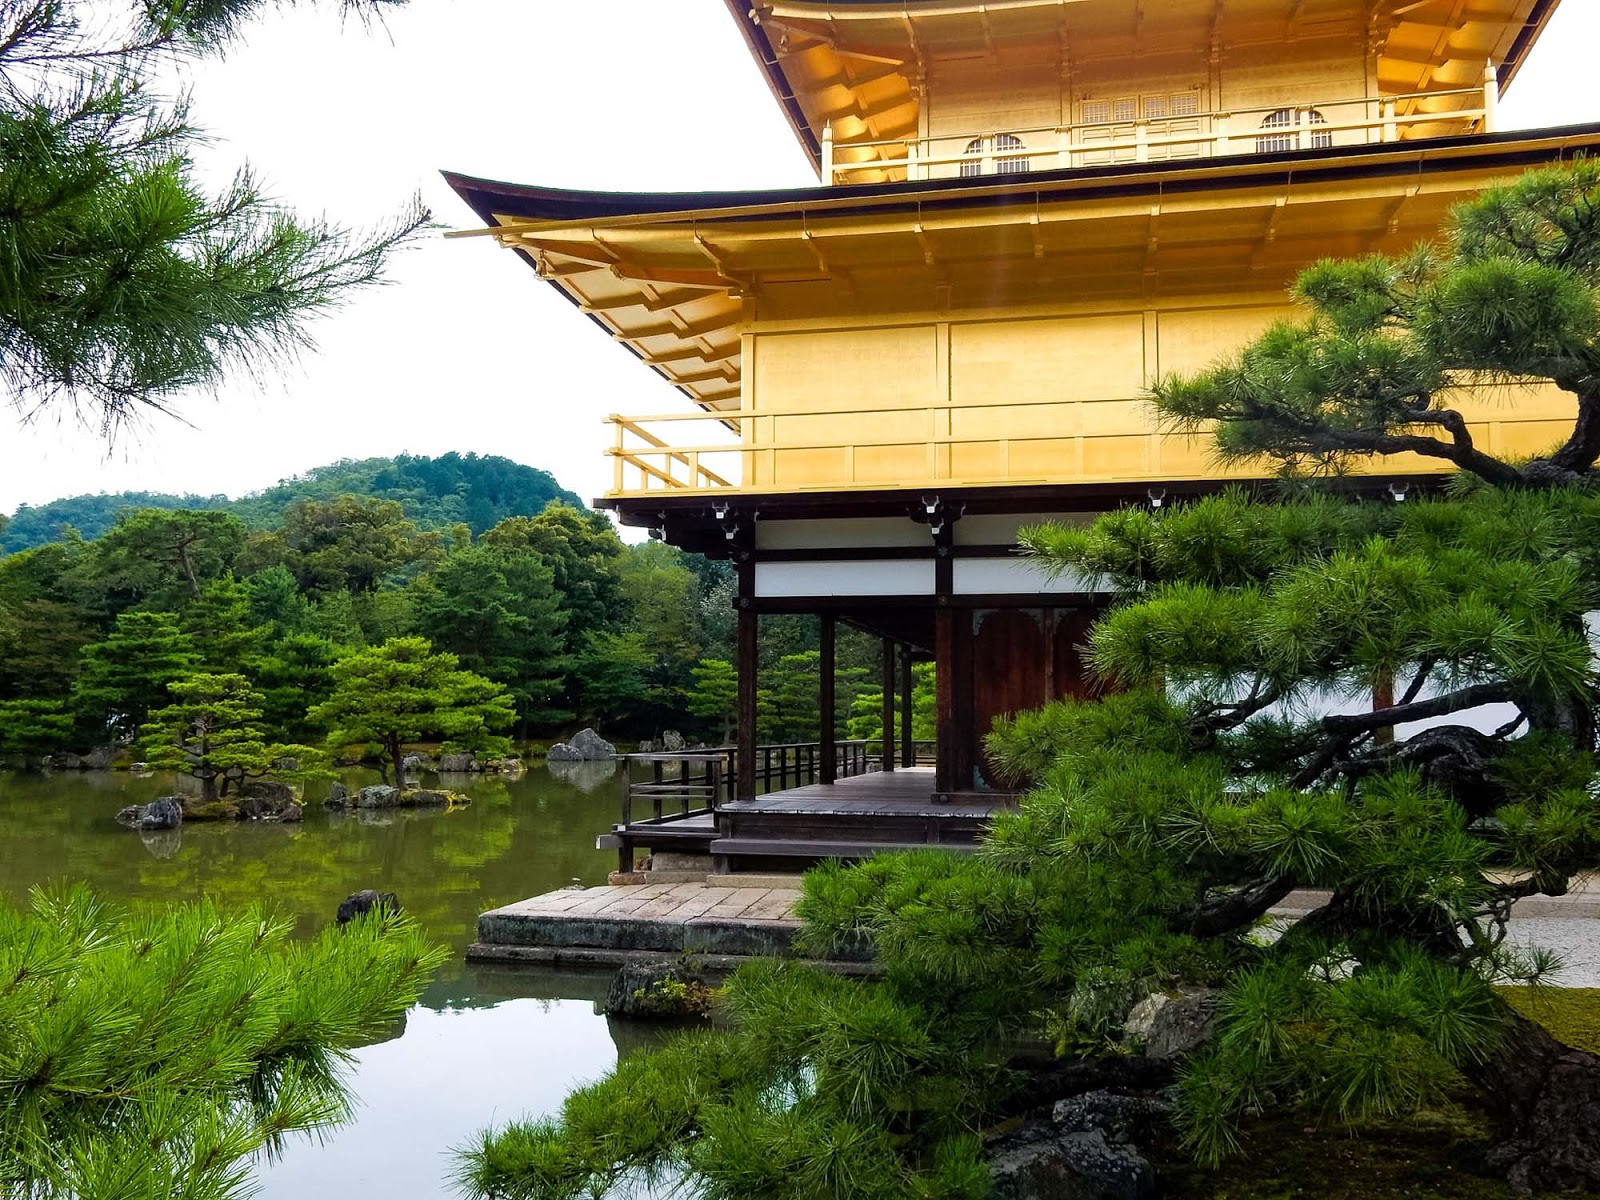 A Make Believe World Travel Blog: Kinkaku-ji, The Golden Pavilion